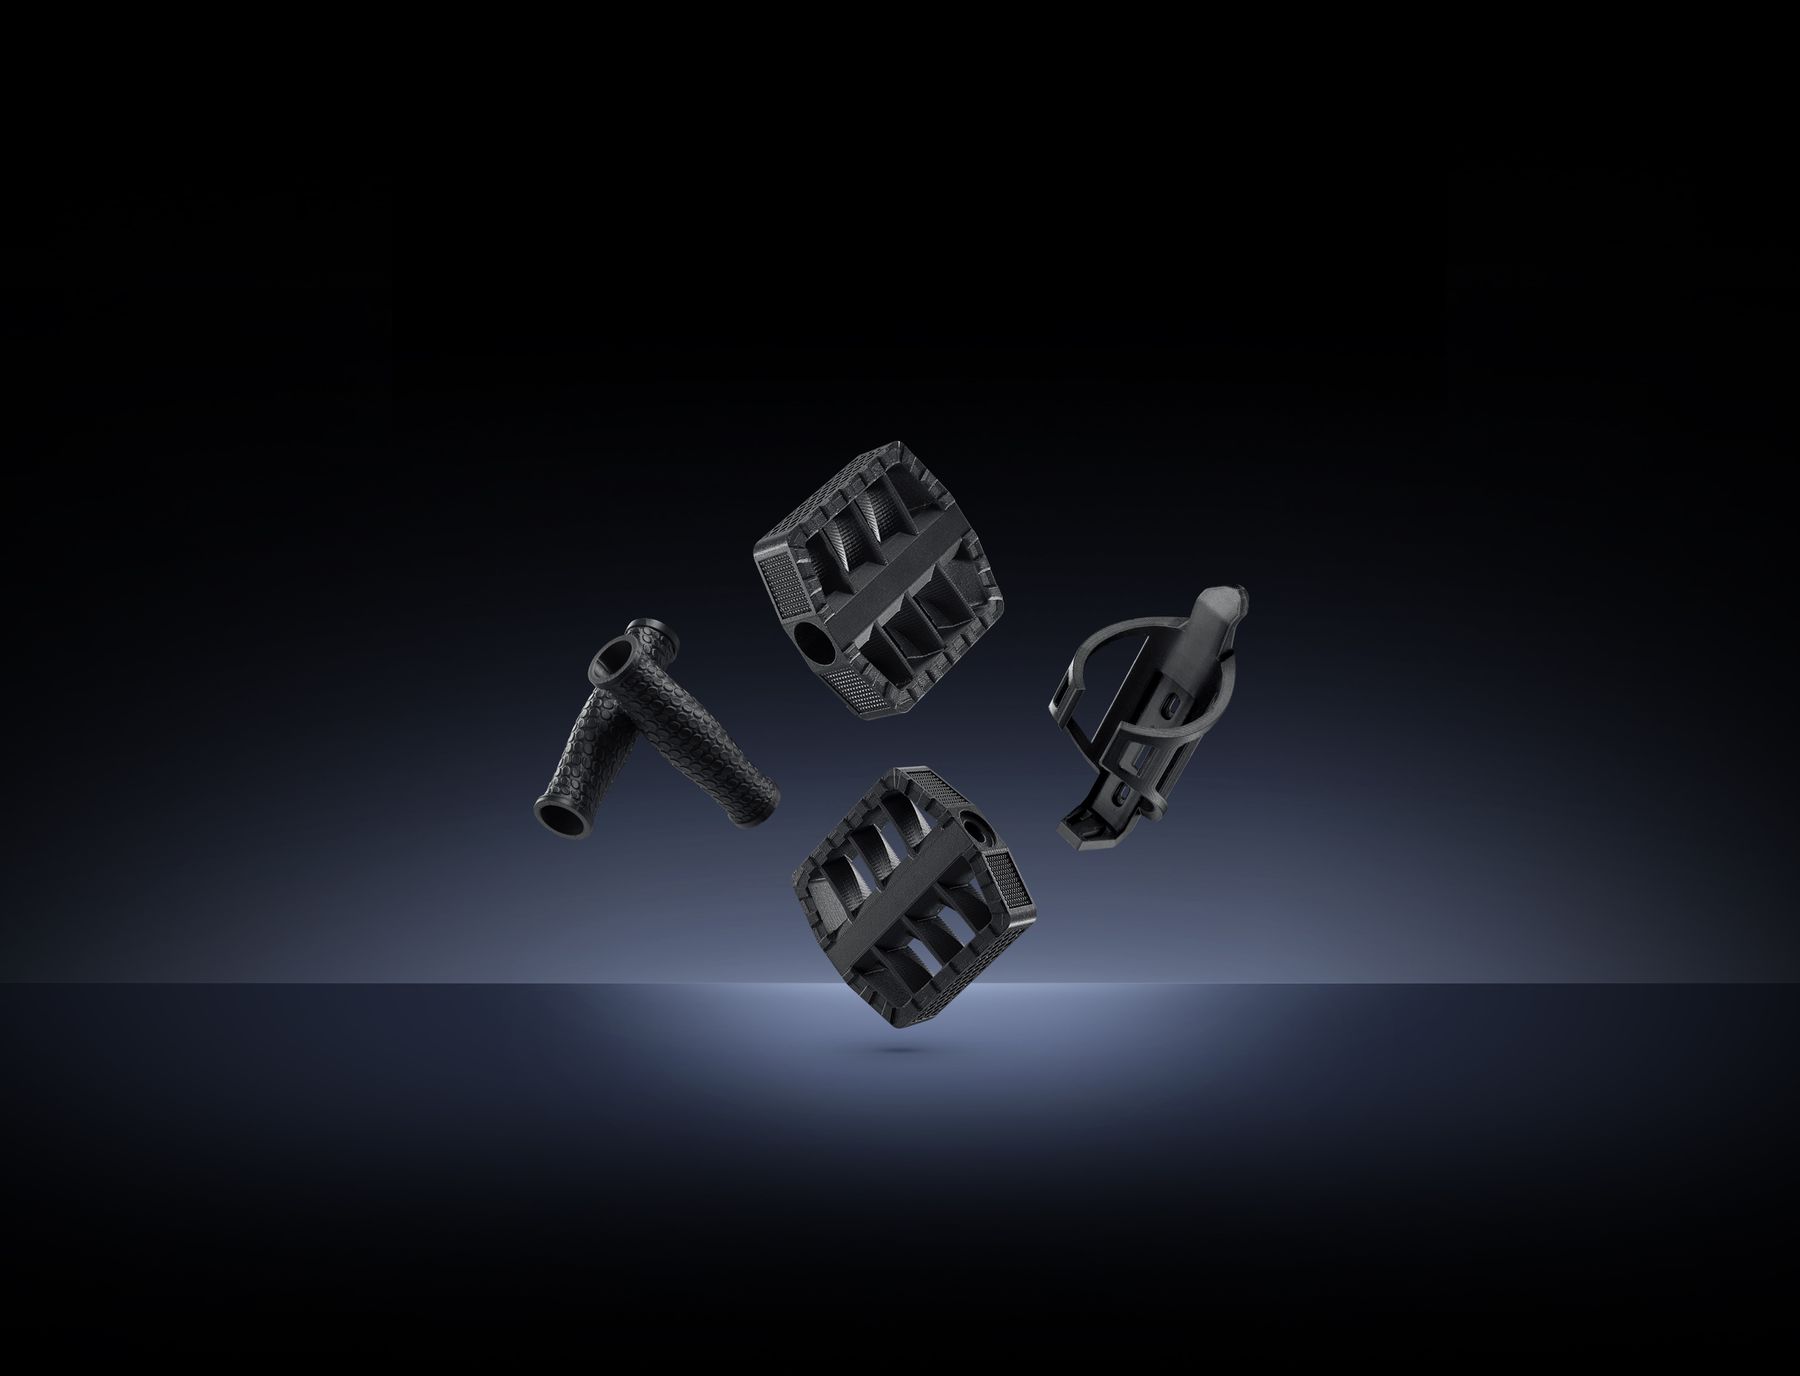 K1C Carbon Fiber Prints | Creality K1C 3D Printer: New Champion of Speed and Skill